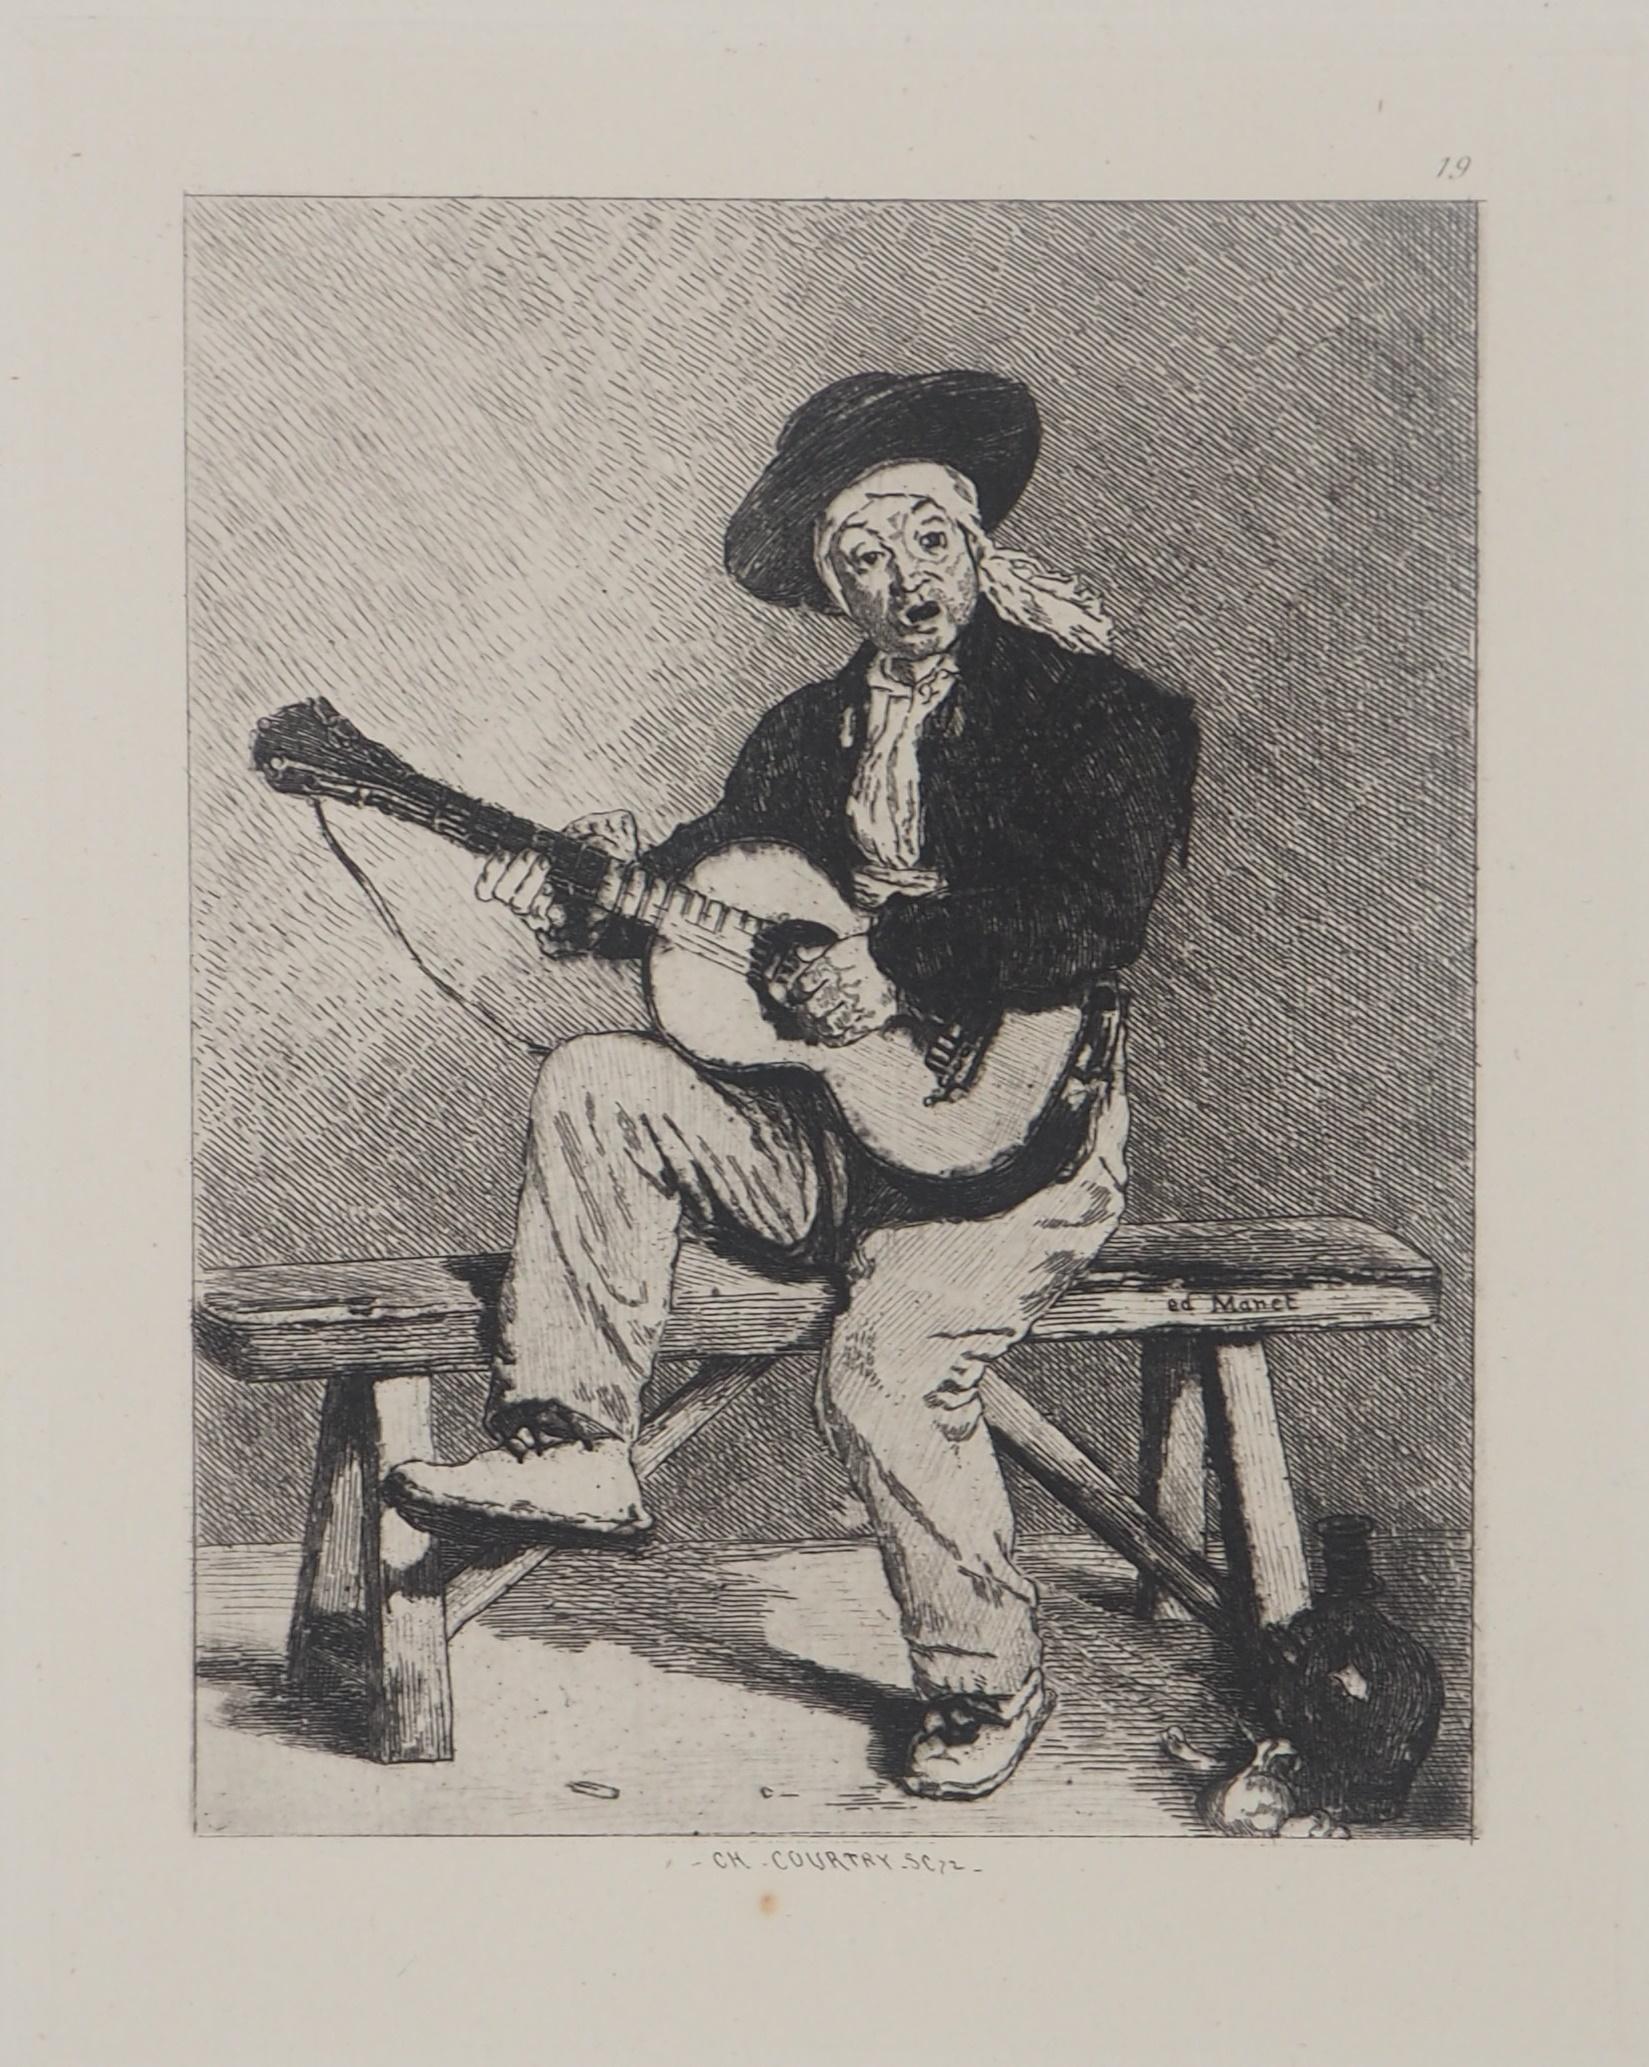 Edouard Manet Portrait Print - Spanish Guitar Player - Original etching - Ed. Durand Ruel, 1873